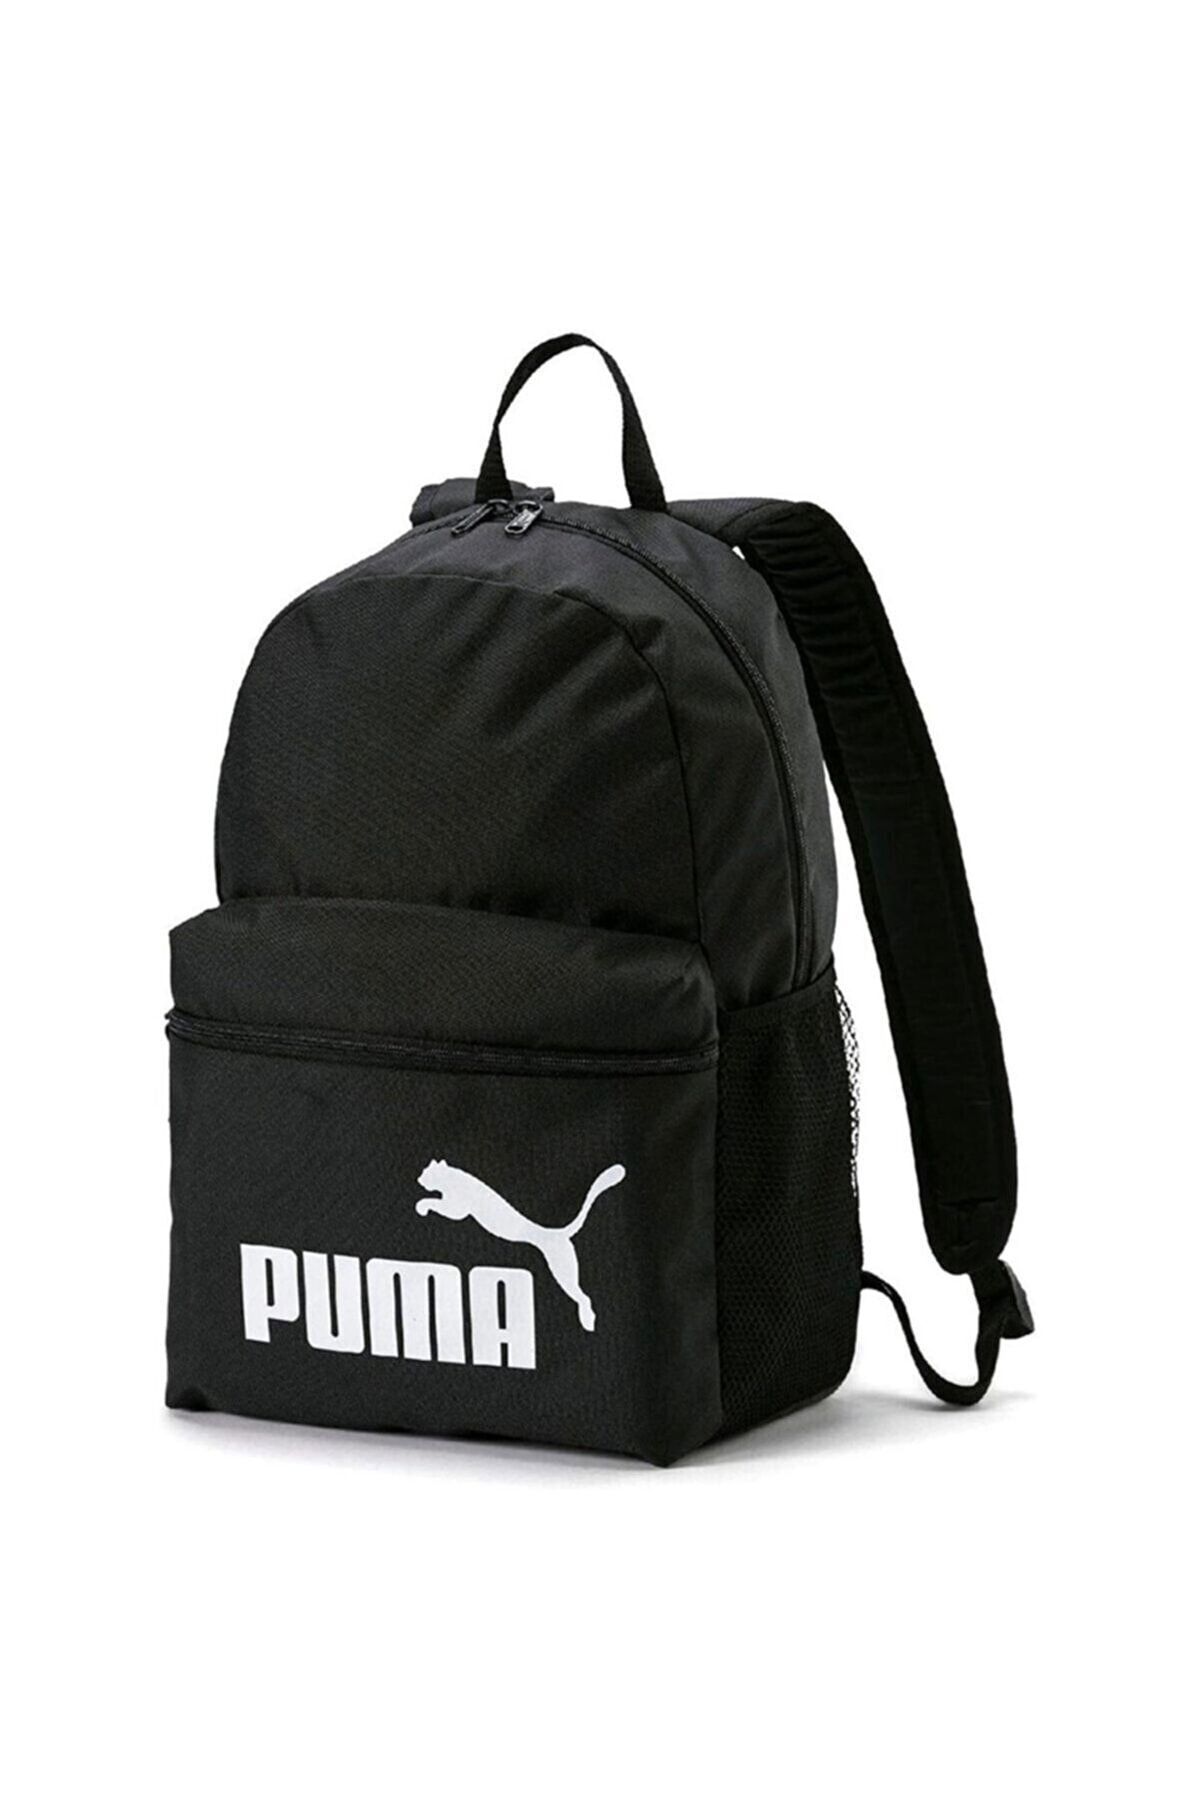 Puma Phase Backpack Çanta